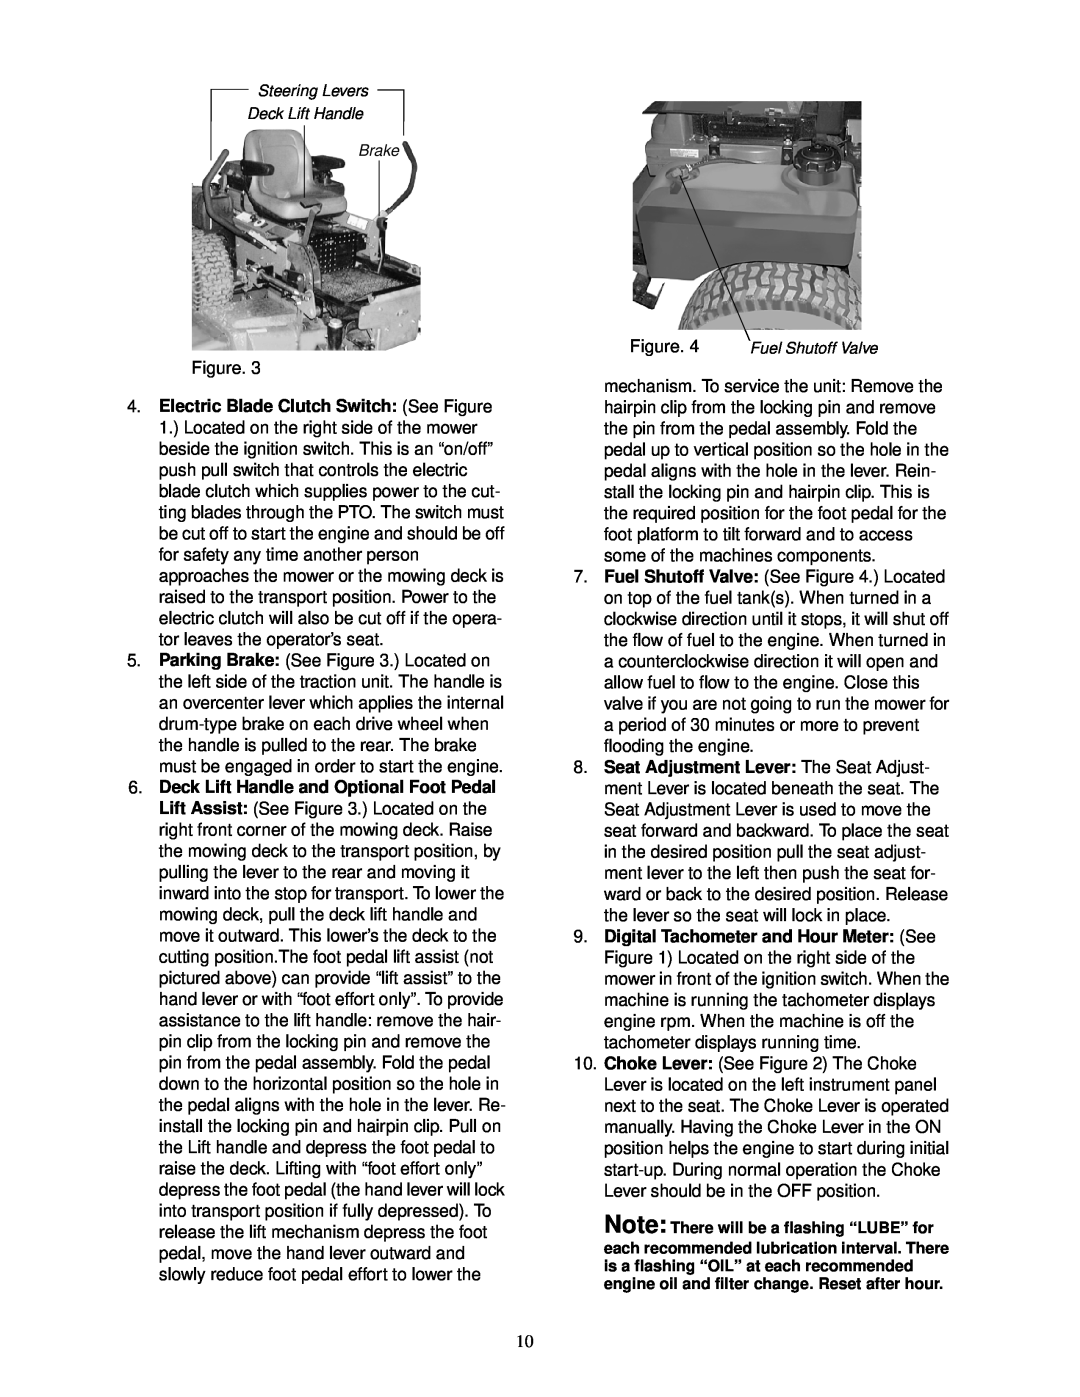 MTD 18HP service manual Steering Levers Deck Lift Handle Brake, Figure. 4 Fuel Shutoff Valve 